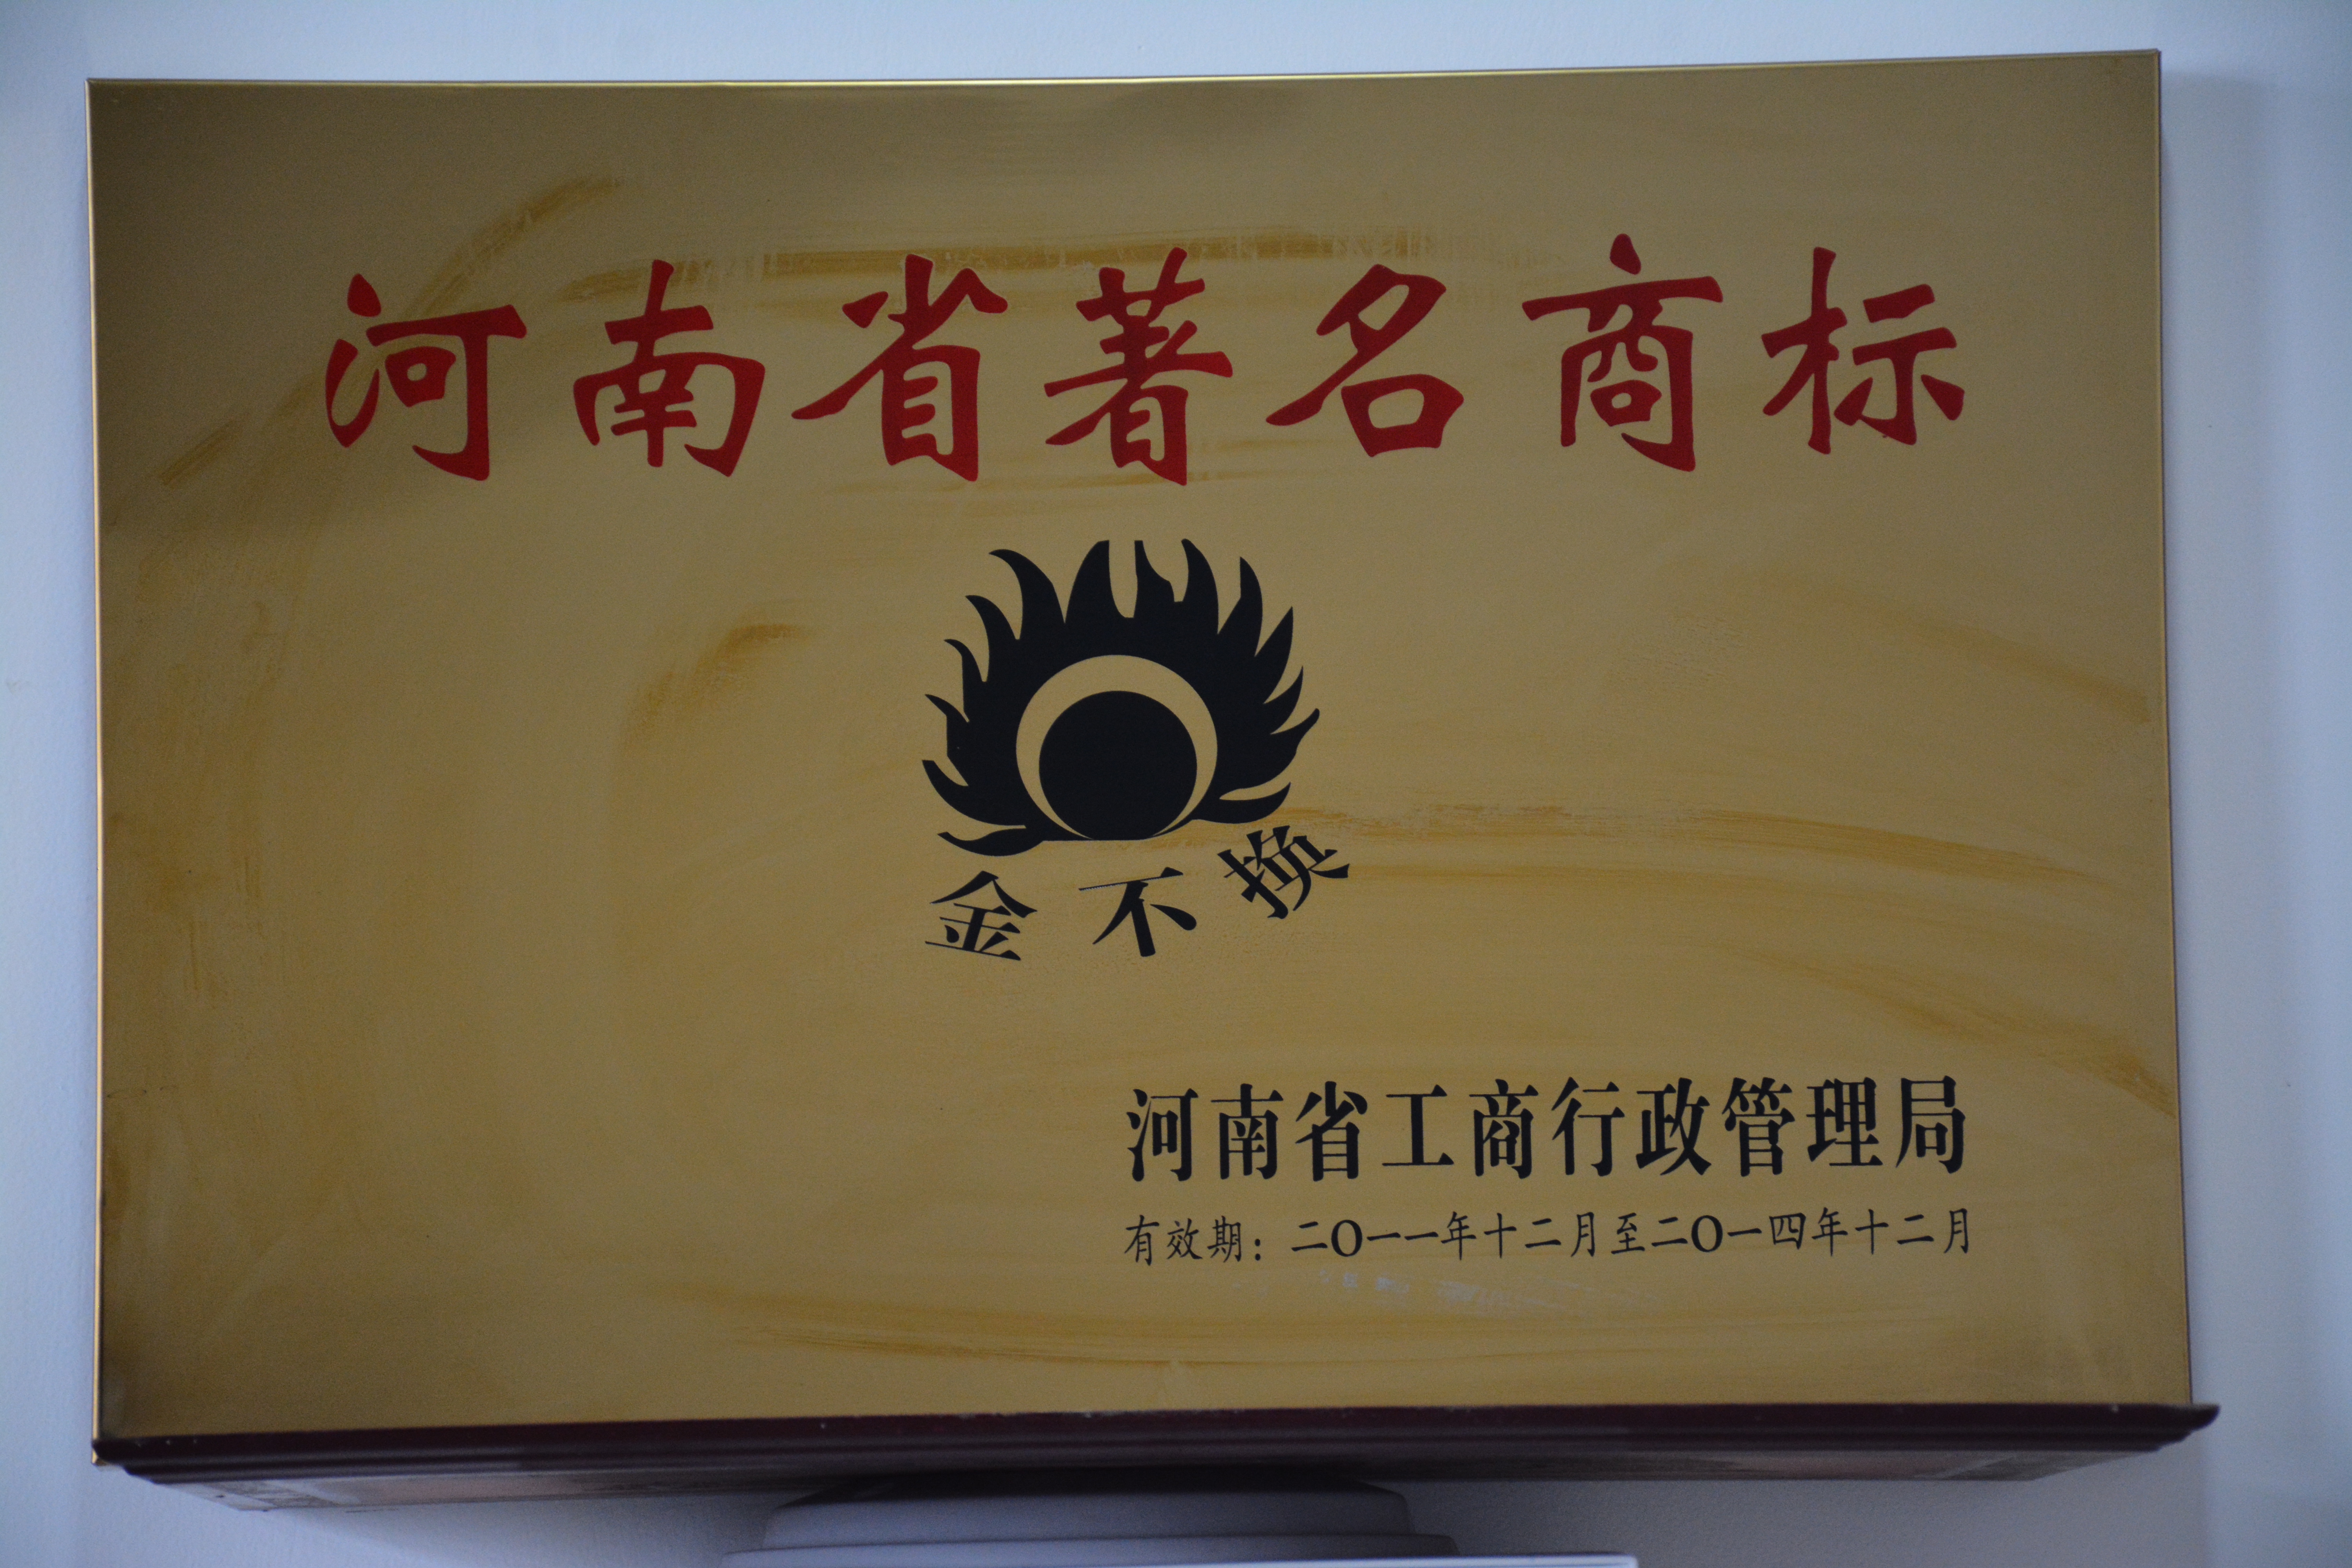 Famous trademark in Henan